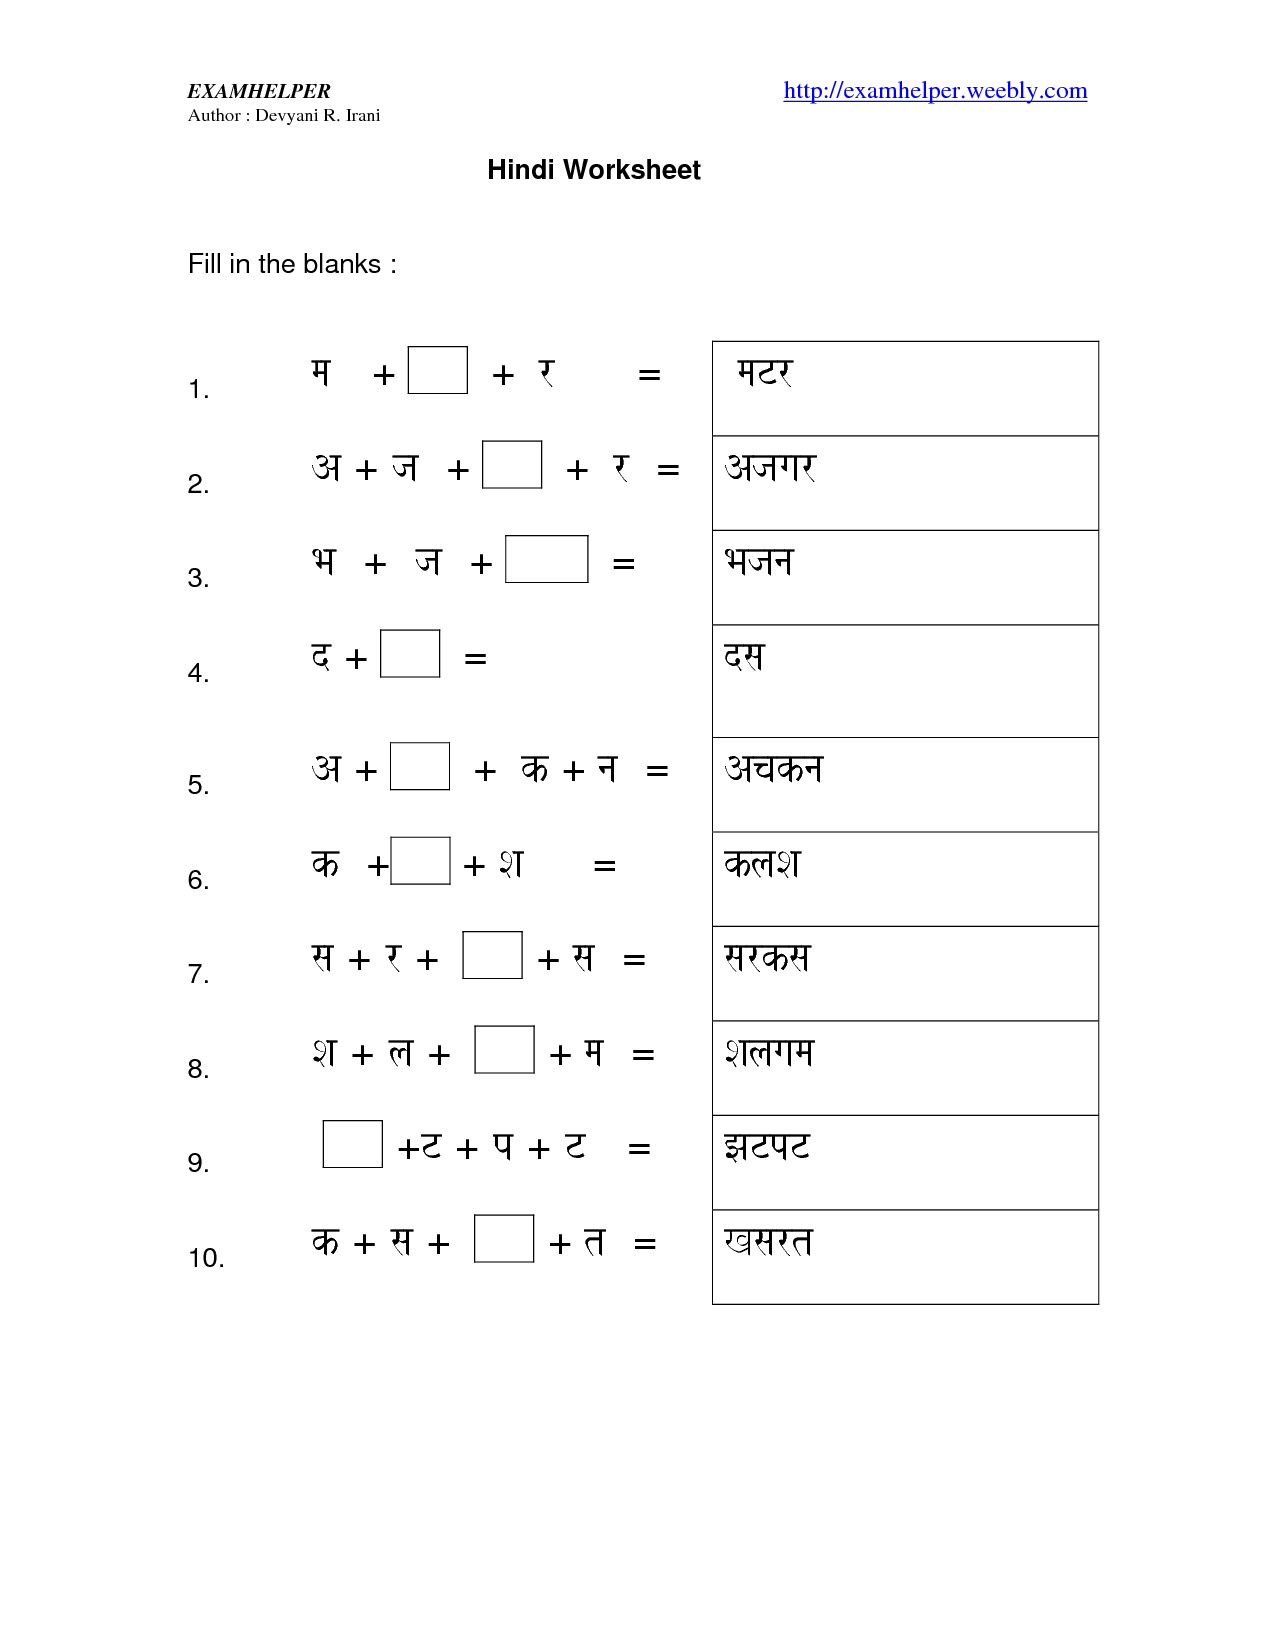 Hindi Worksheet for Class 1 Image